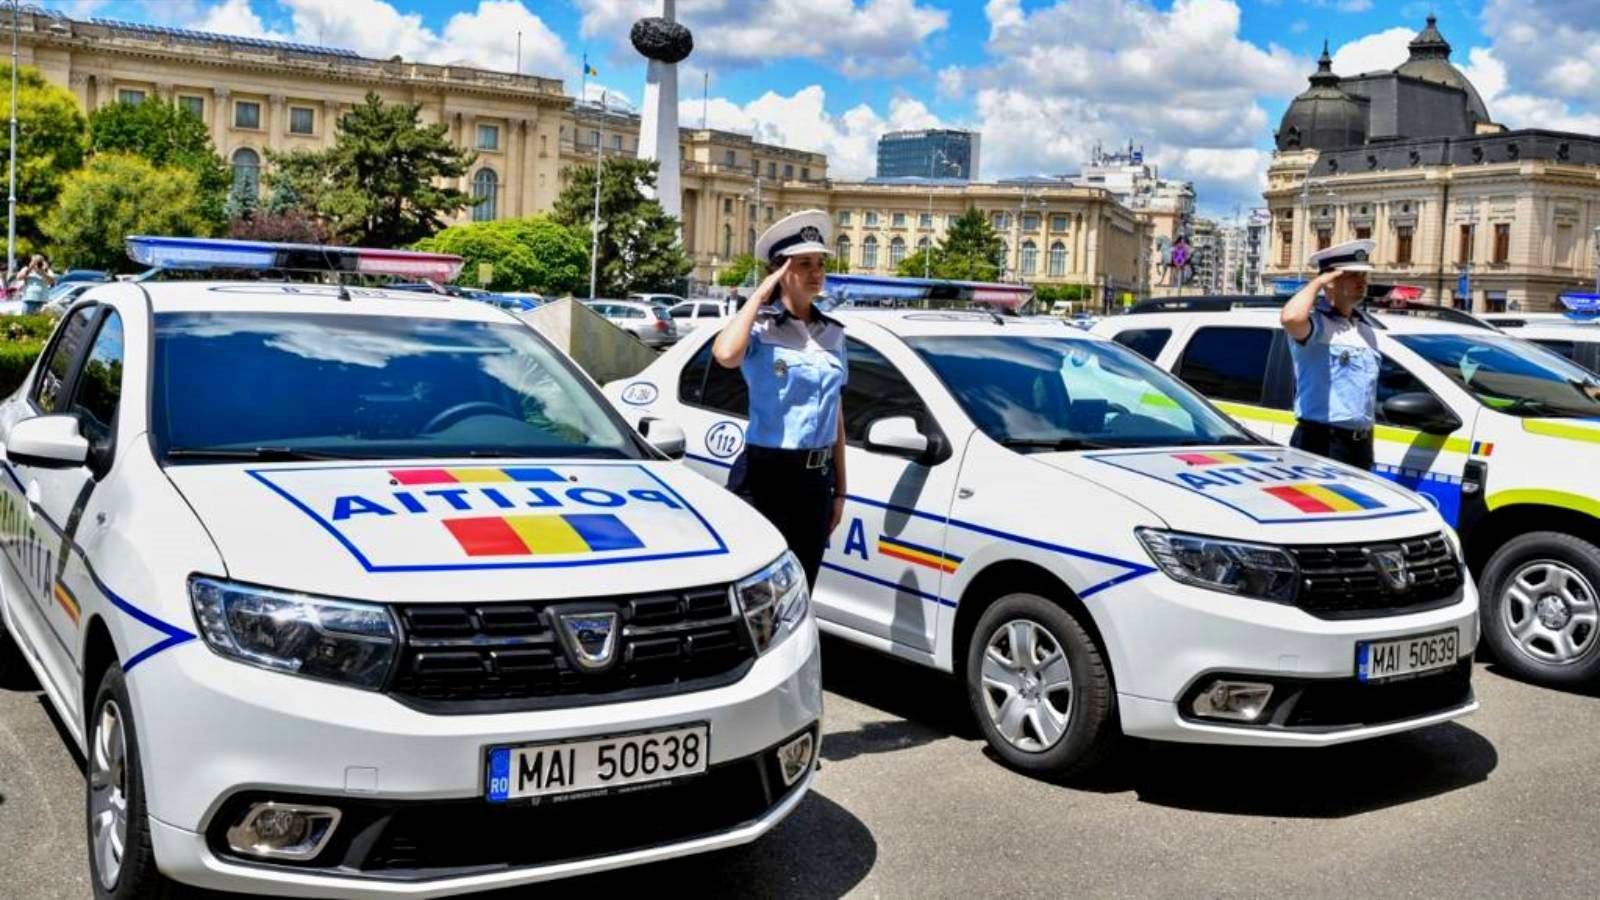 Den rumänska polisens varning reser under påskperioden